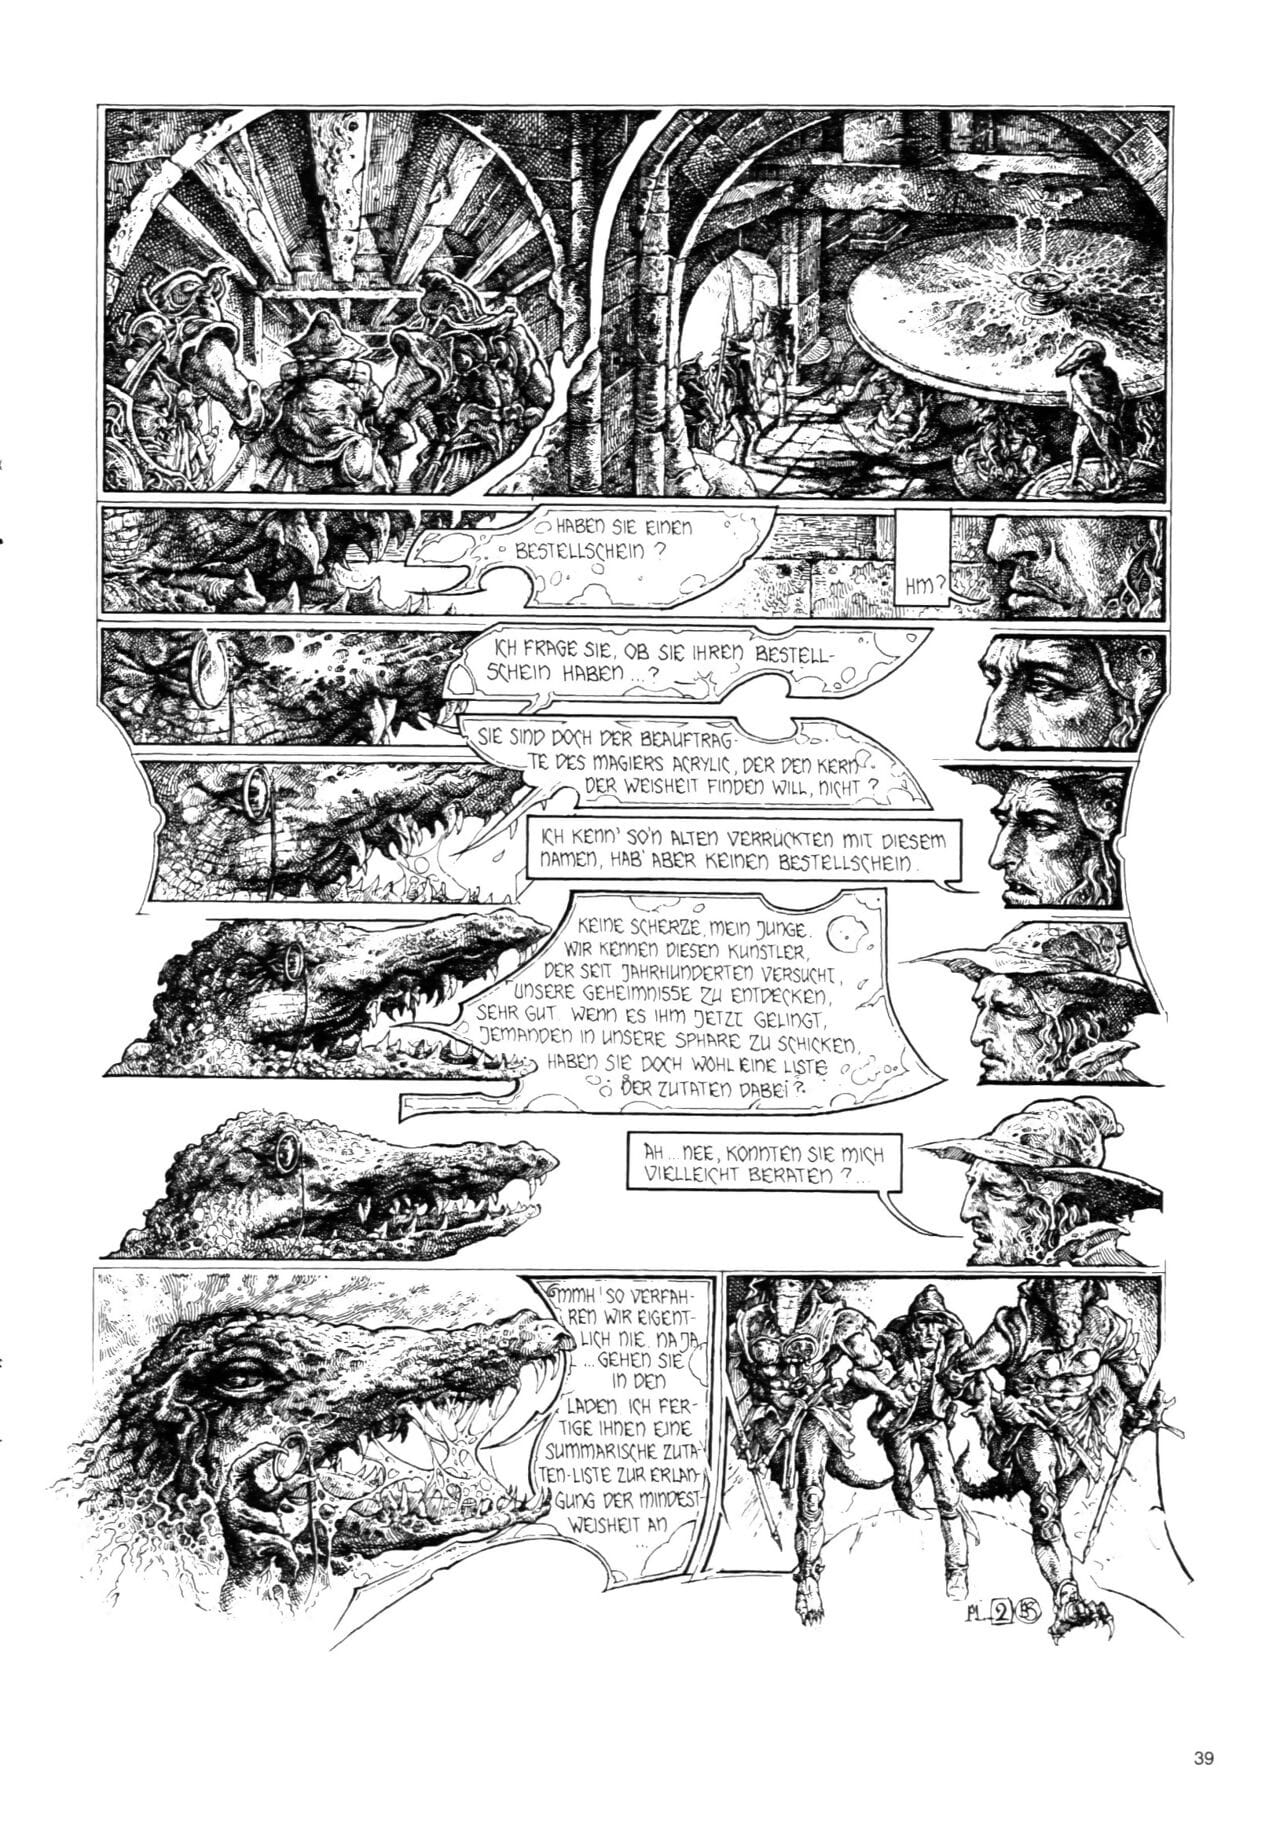 Schwermetall #054 Parte 2 page 1